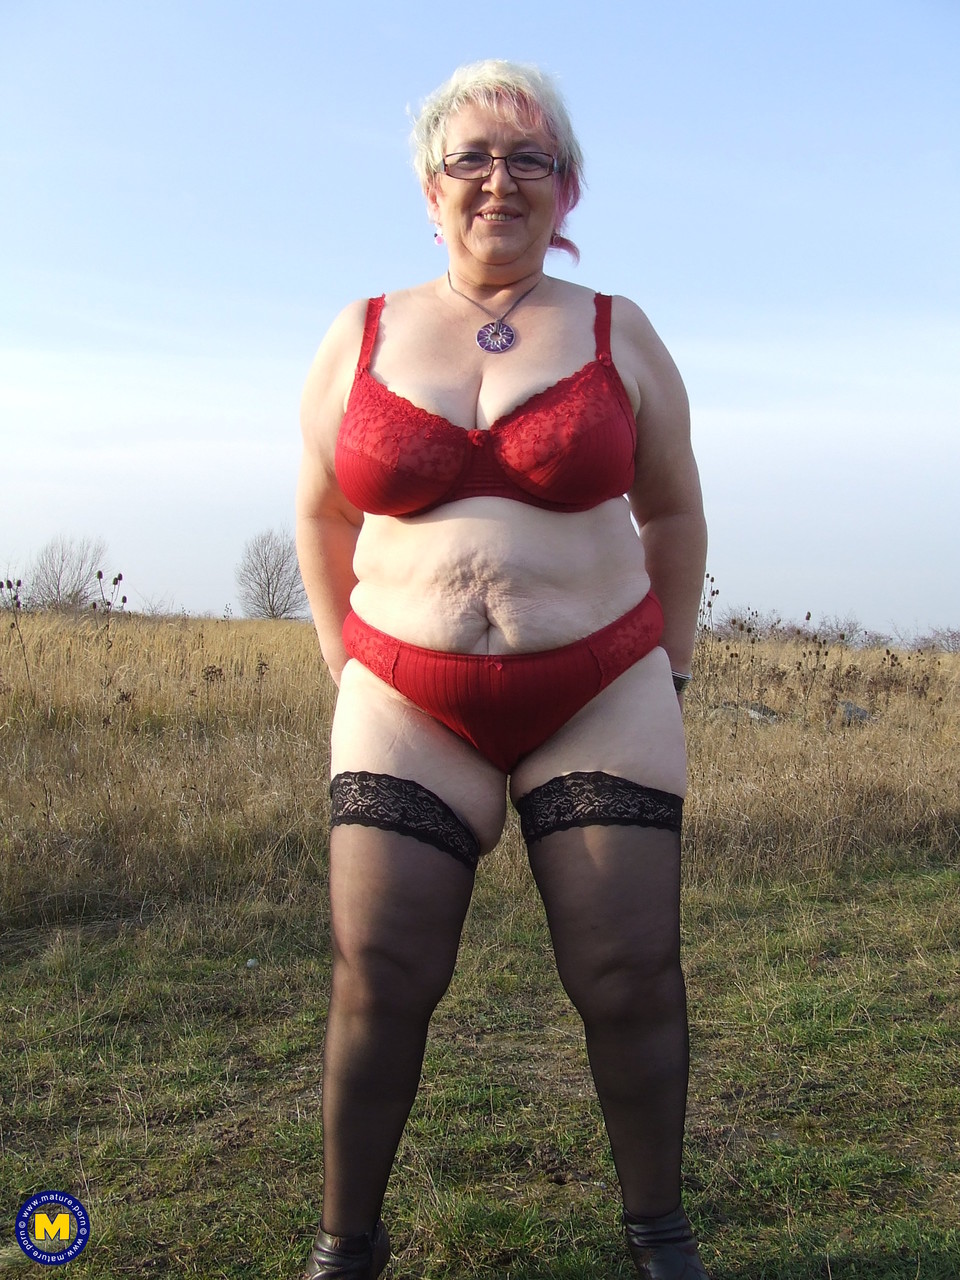 Wild granny with huge saggy tits Silke poses in lingerie & masturbates outside 色情照片 #422616209 | Mature NL Pics, Silke, Granny, 手机色情